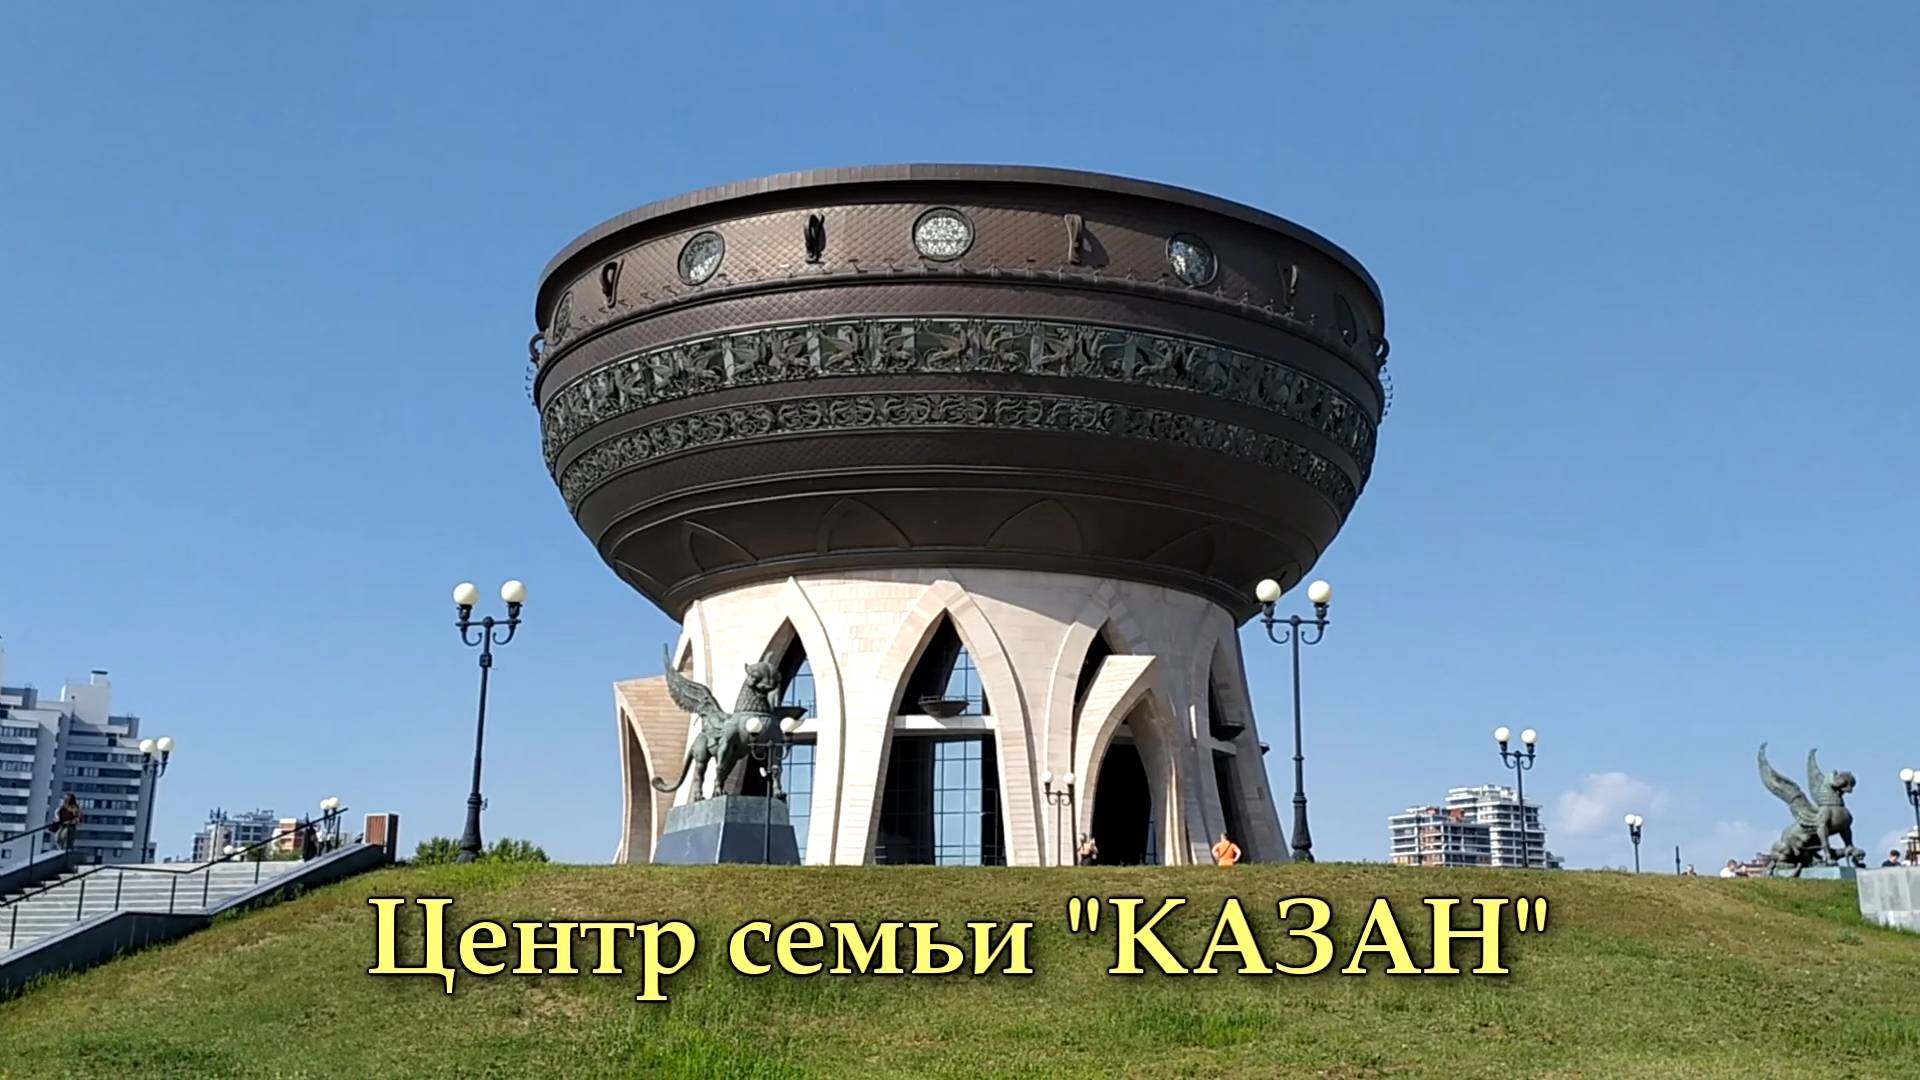 Центр семьи "КАЗАН" (г. Казань)